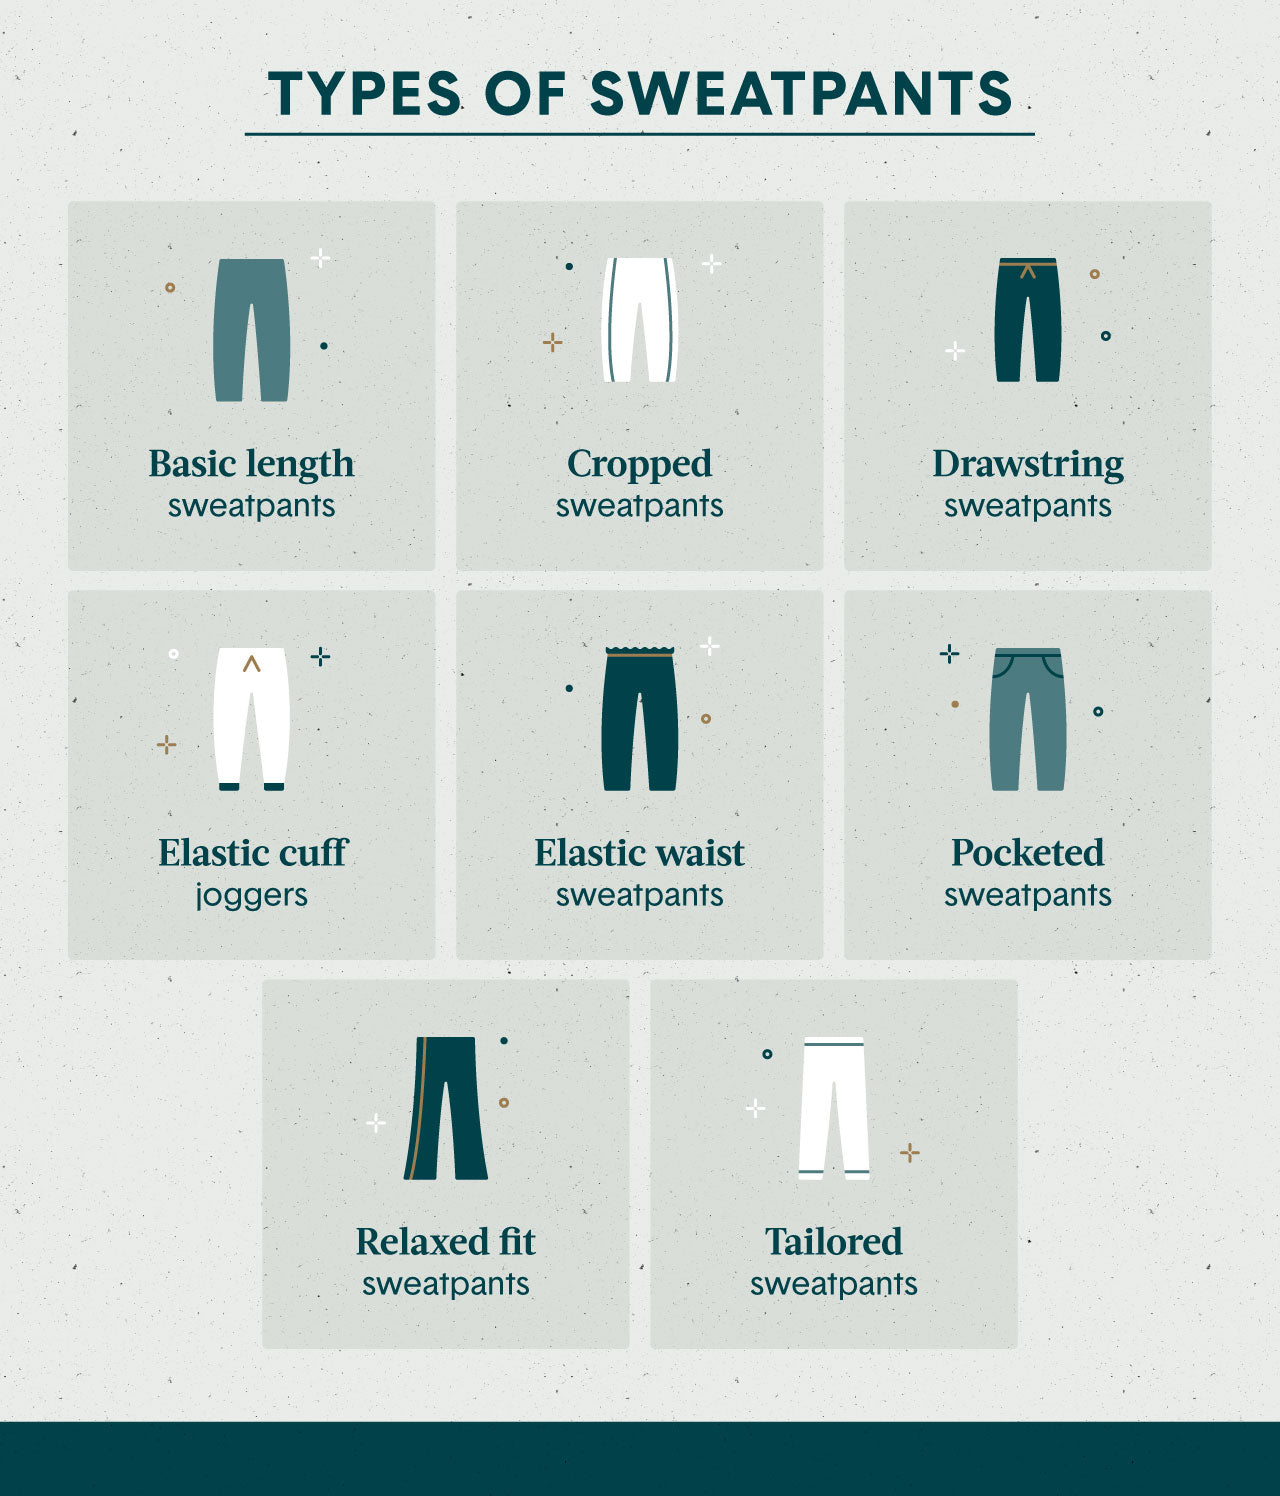 How to Wear Sweatpants